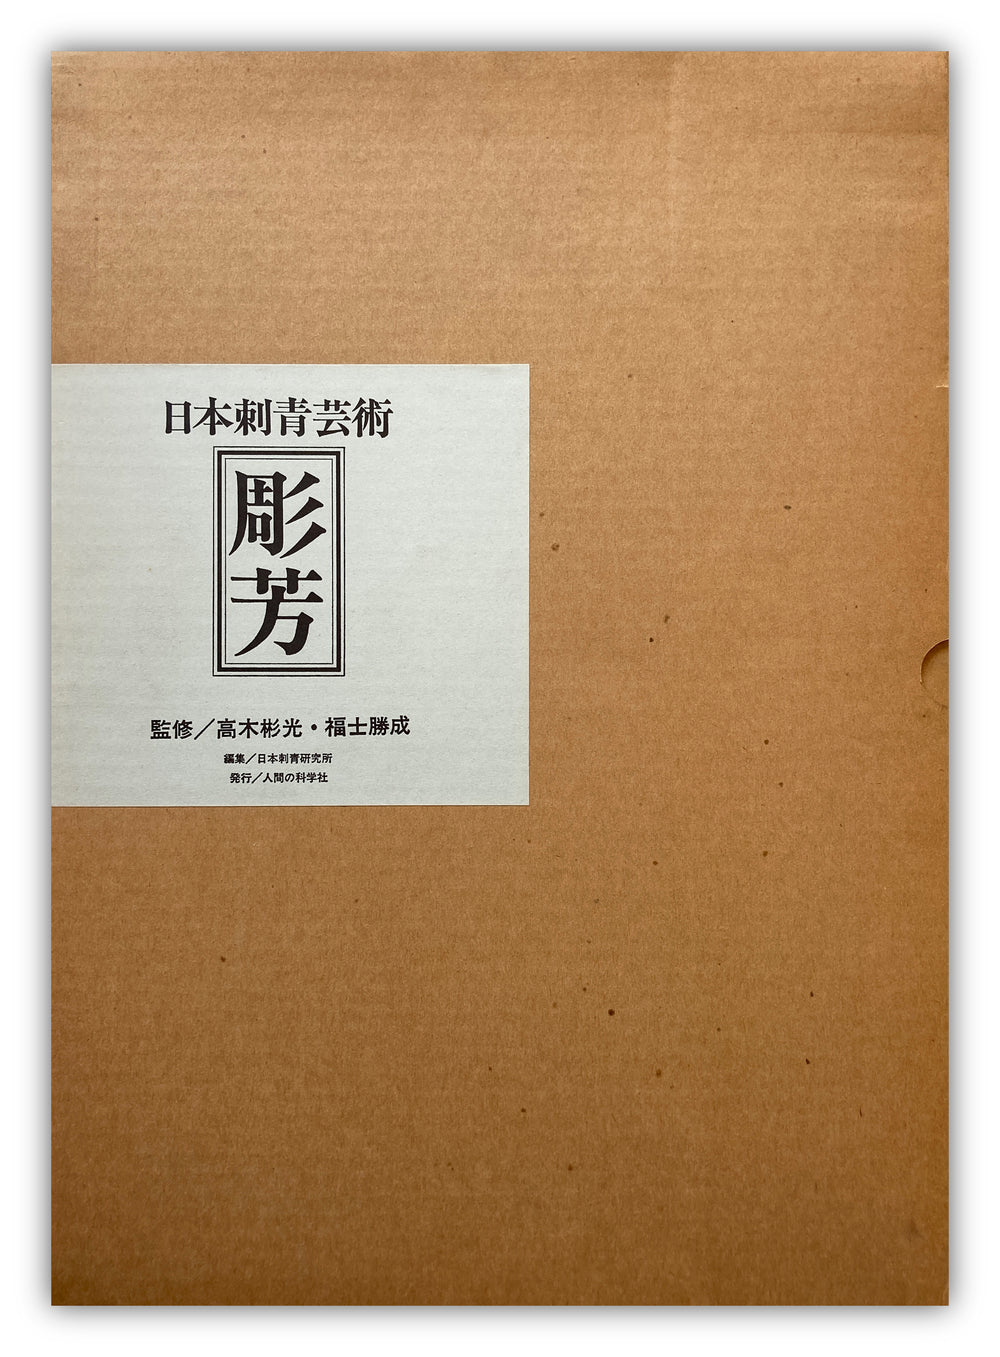 JAPAN’S TATTOO ARTS, HORIYOSHI’S WORLD (First Edition, 1983)